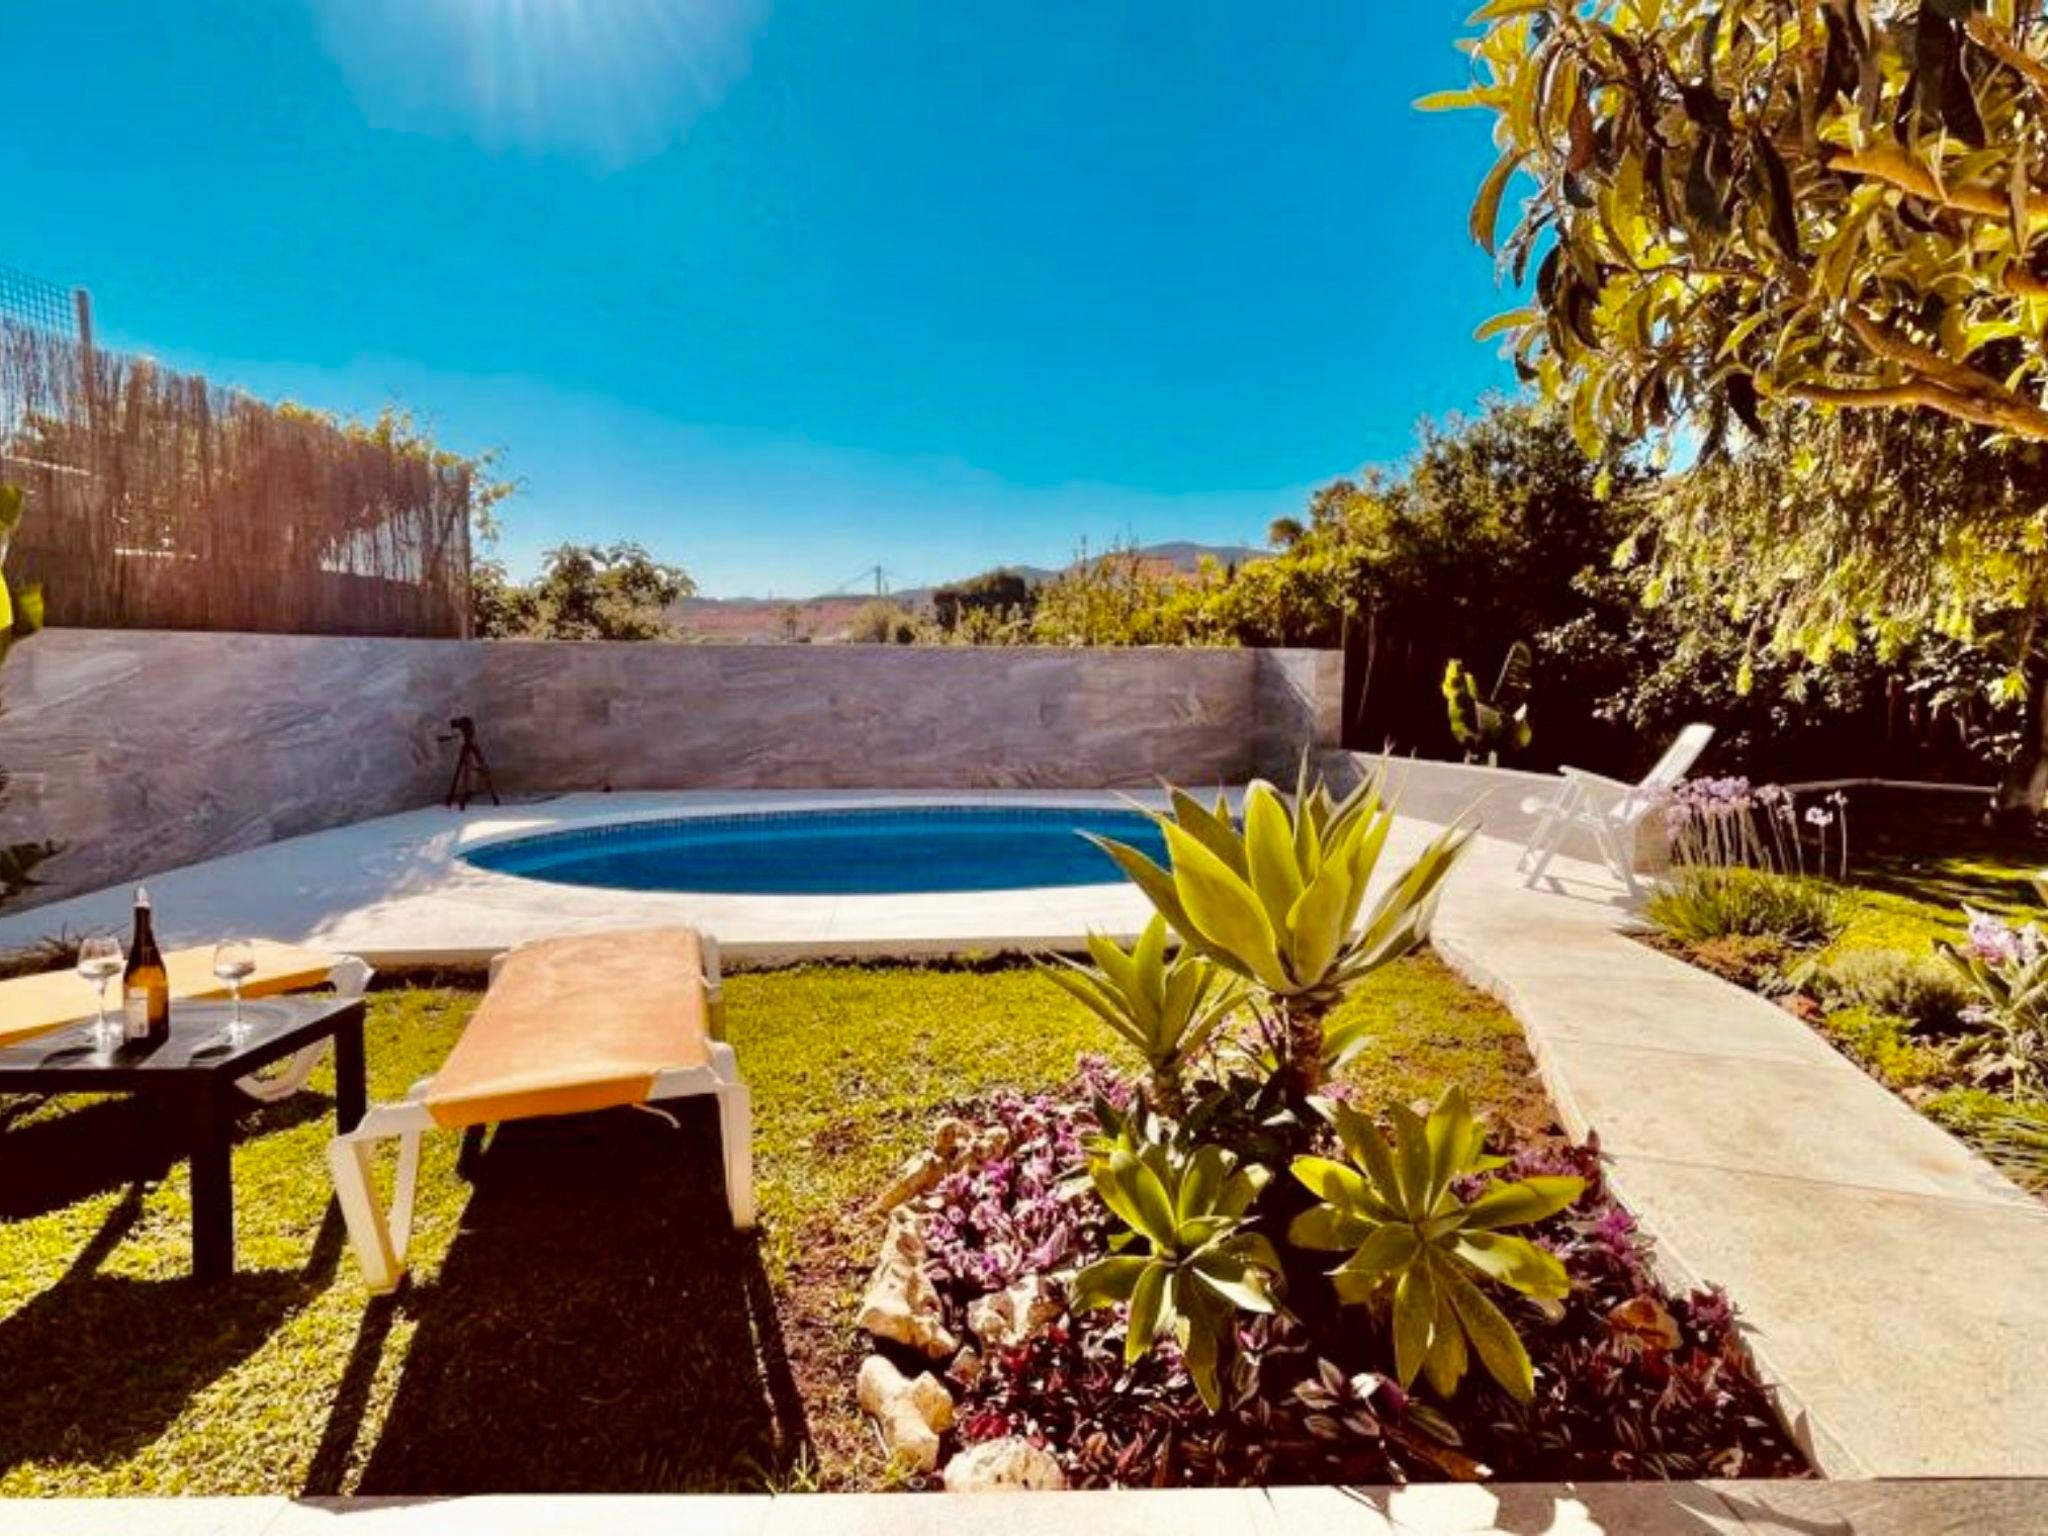 Foto 2 - Casa con 4 camere da letto a Vélez-Málaga con piscina privata e vista mare